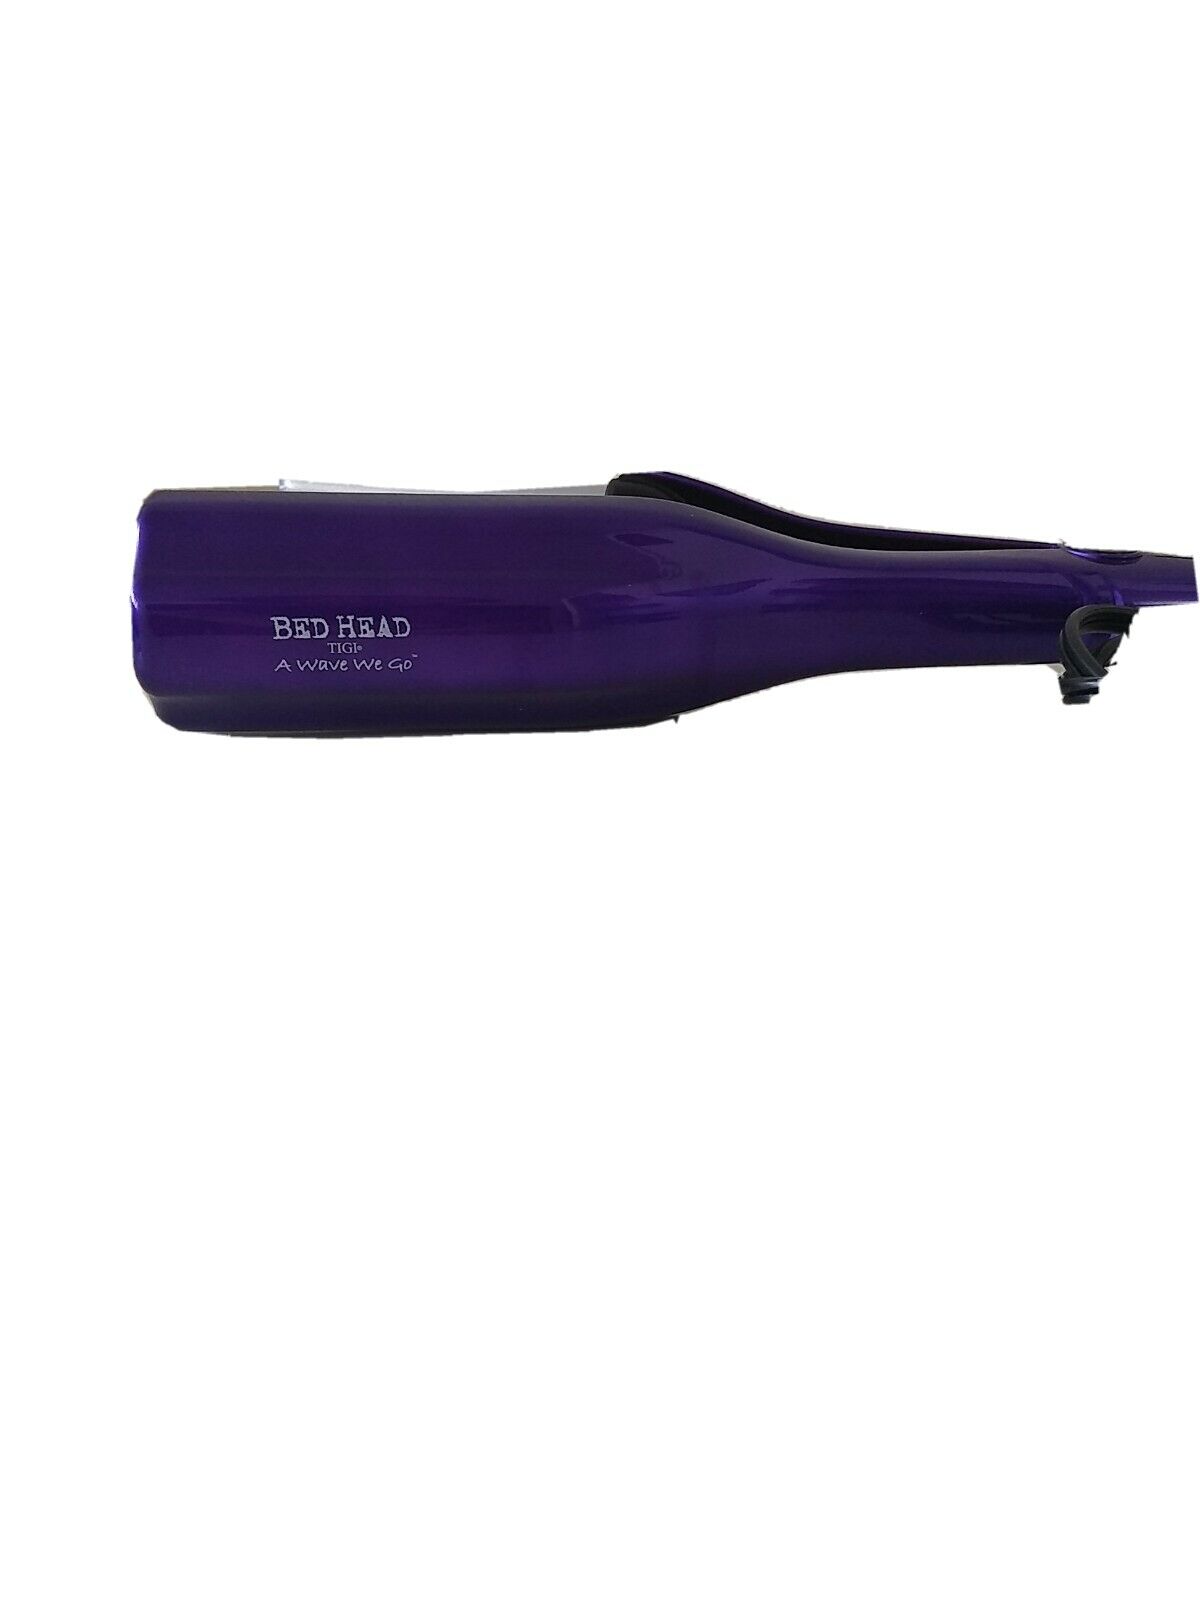 Bed Head A-wave-we-go Bh336 Hair Waver - Purple